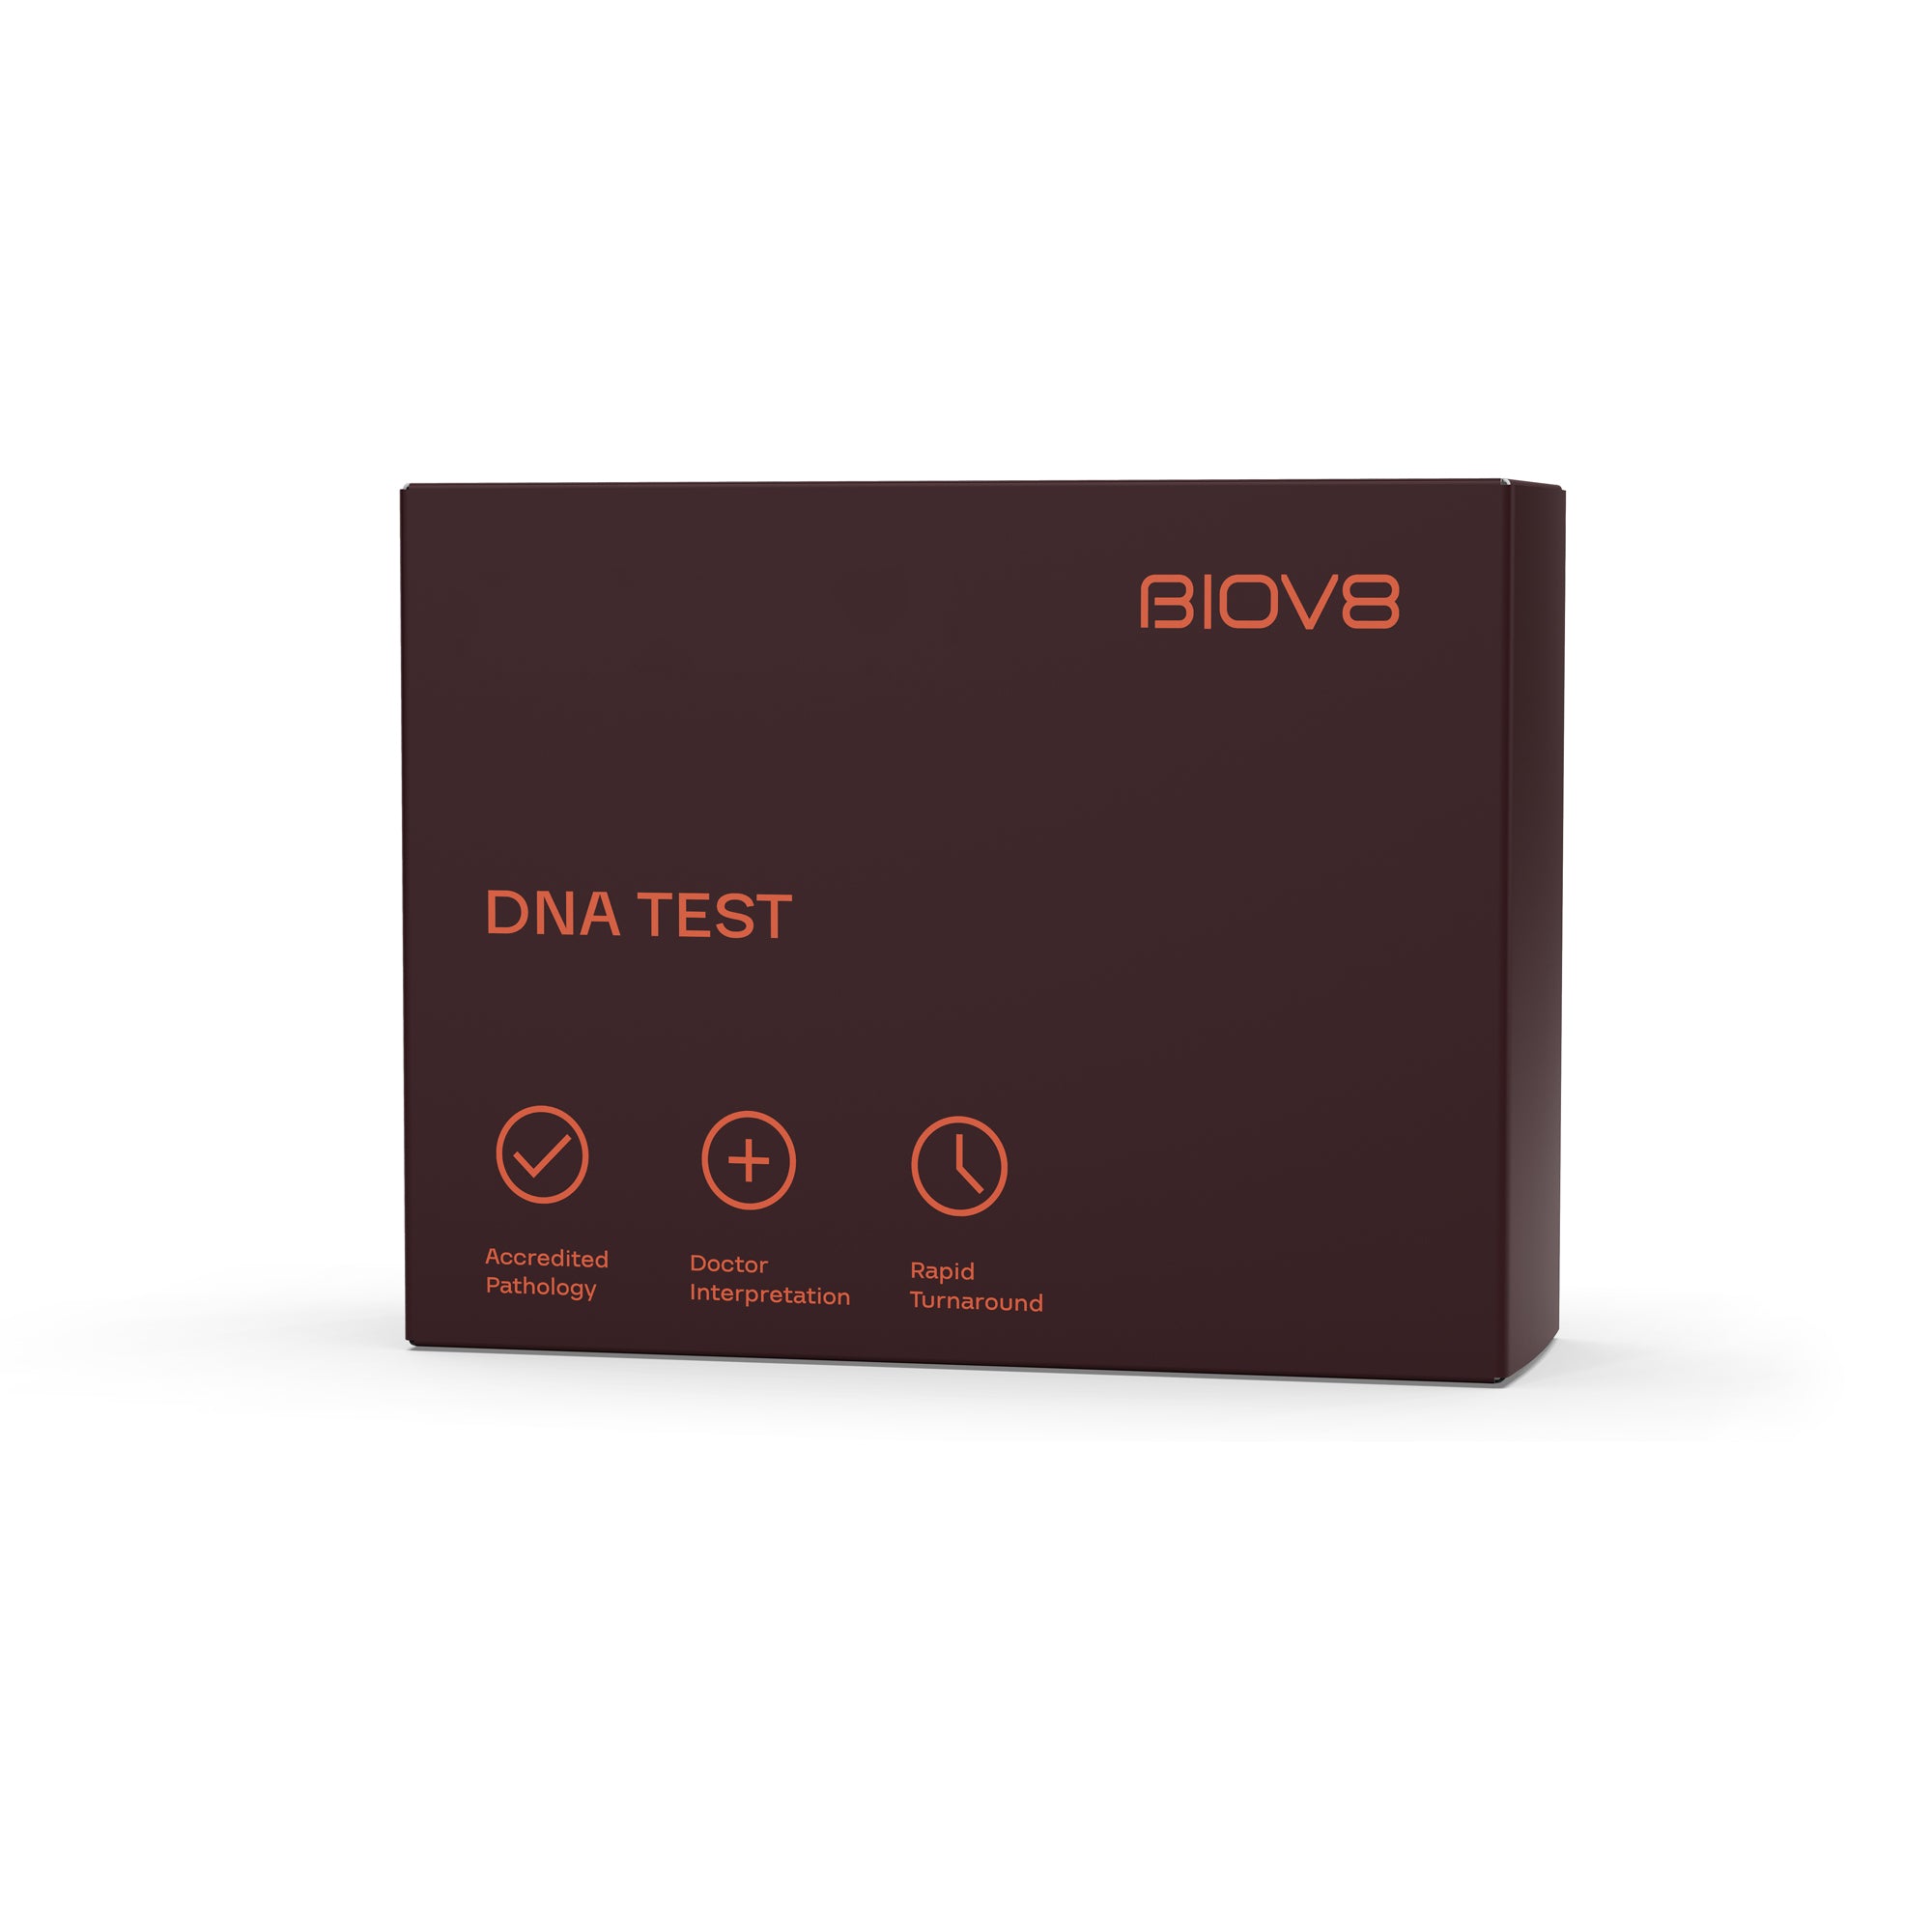 Biov8's Sportsman Performance blood work product